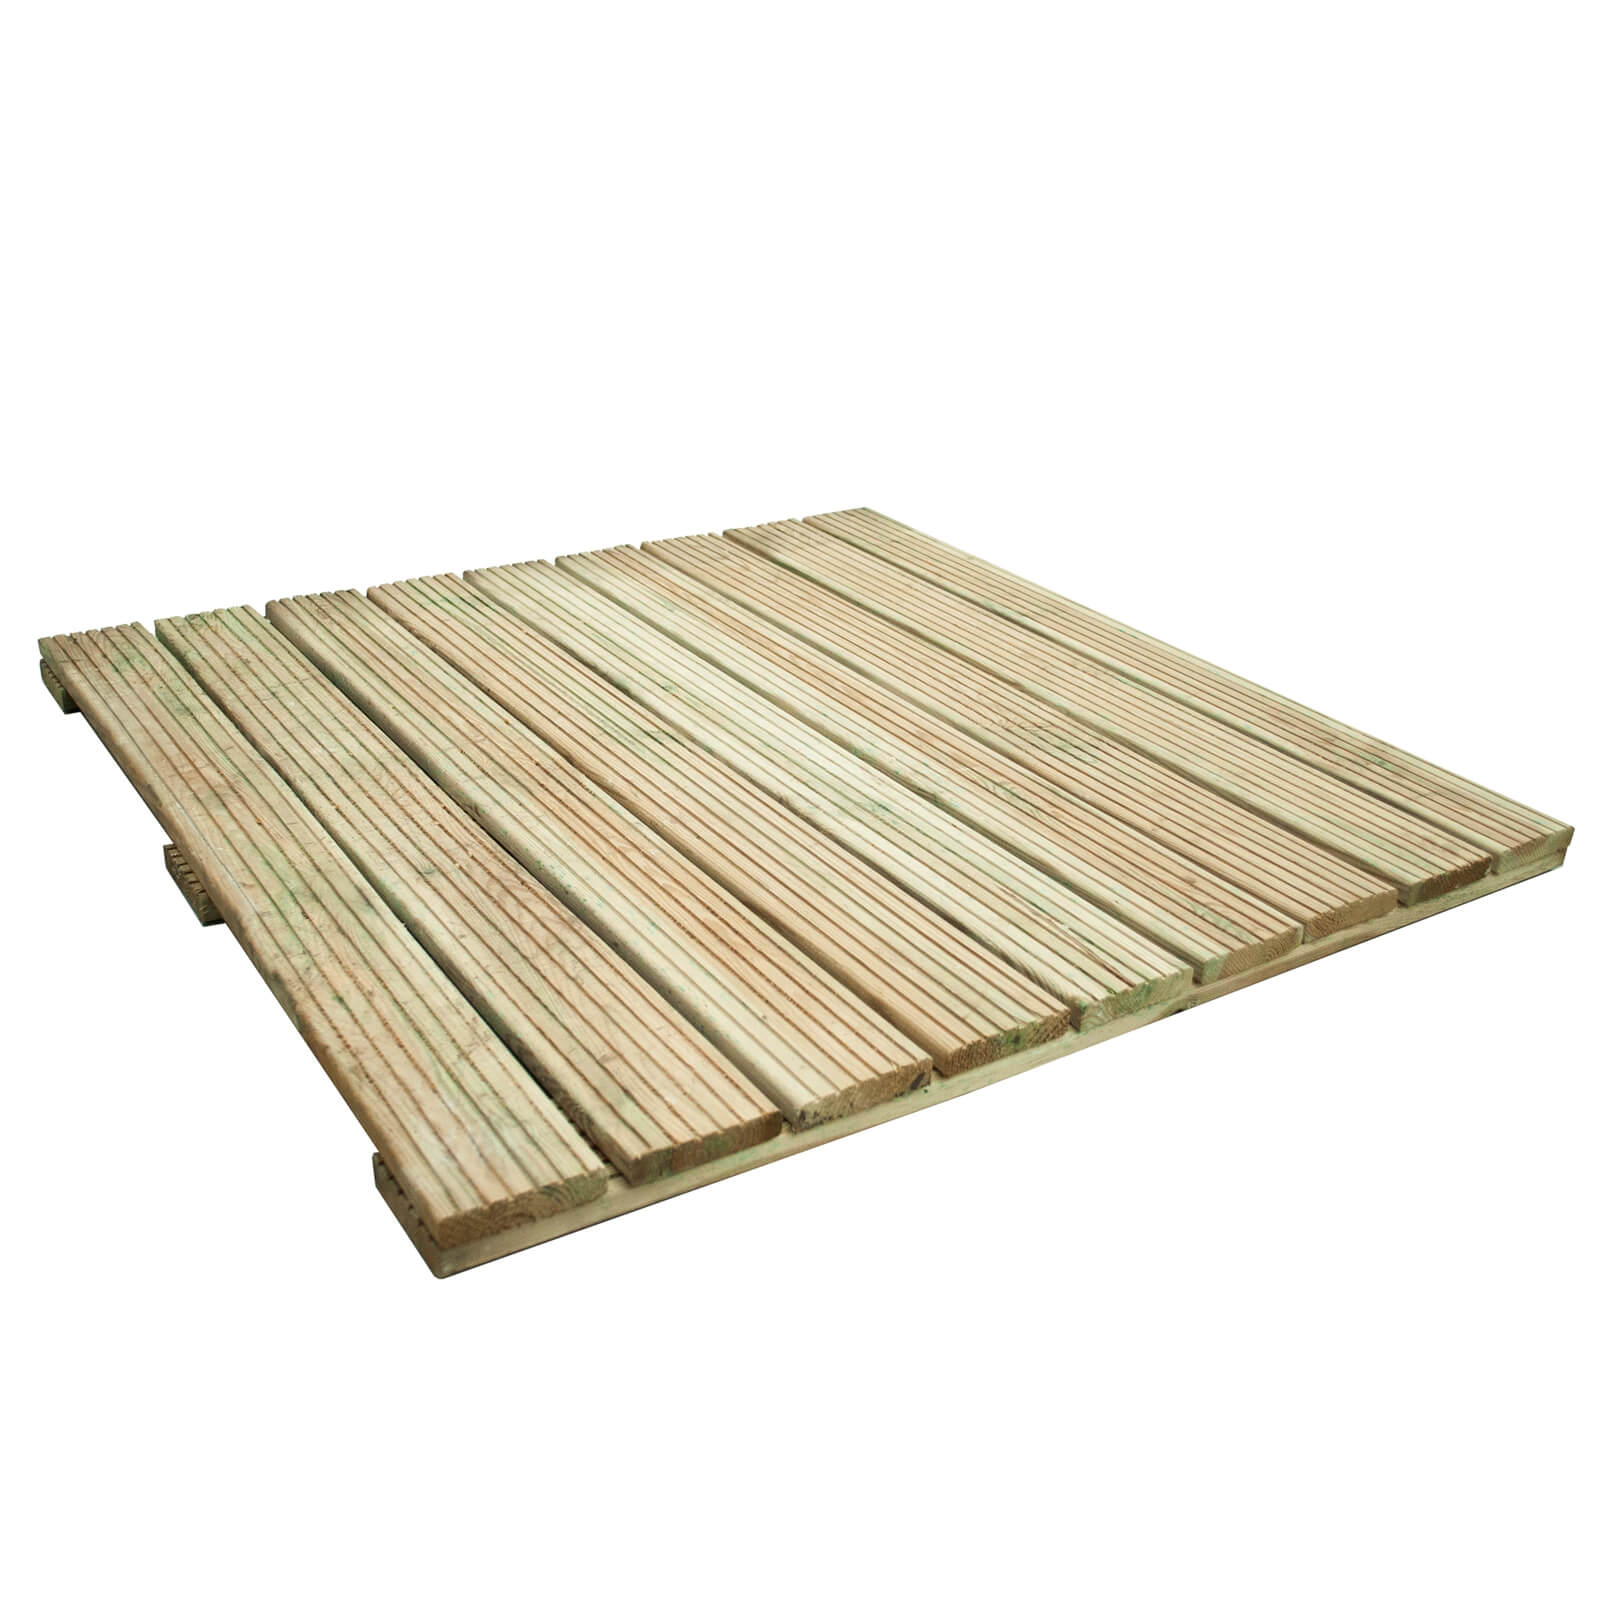 Patio Deck Tile - 90x90cm Pack of 4